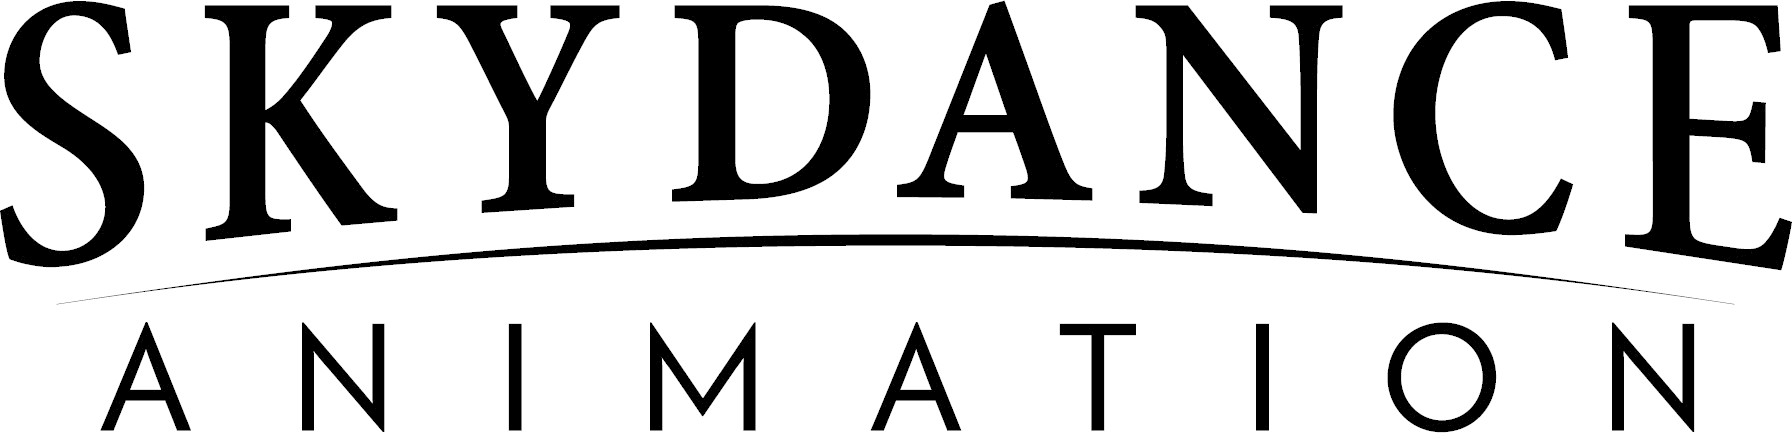 Skydance Animation Logo